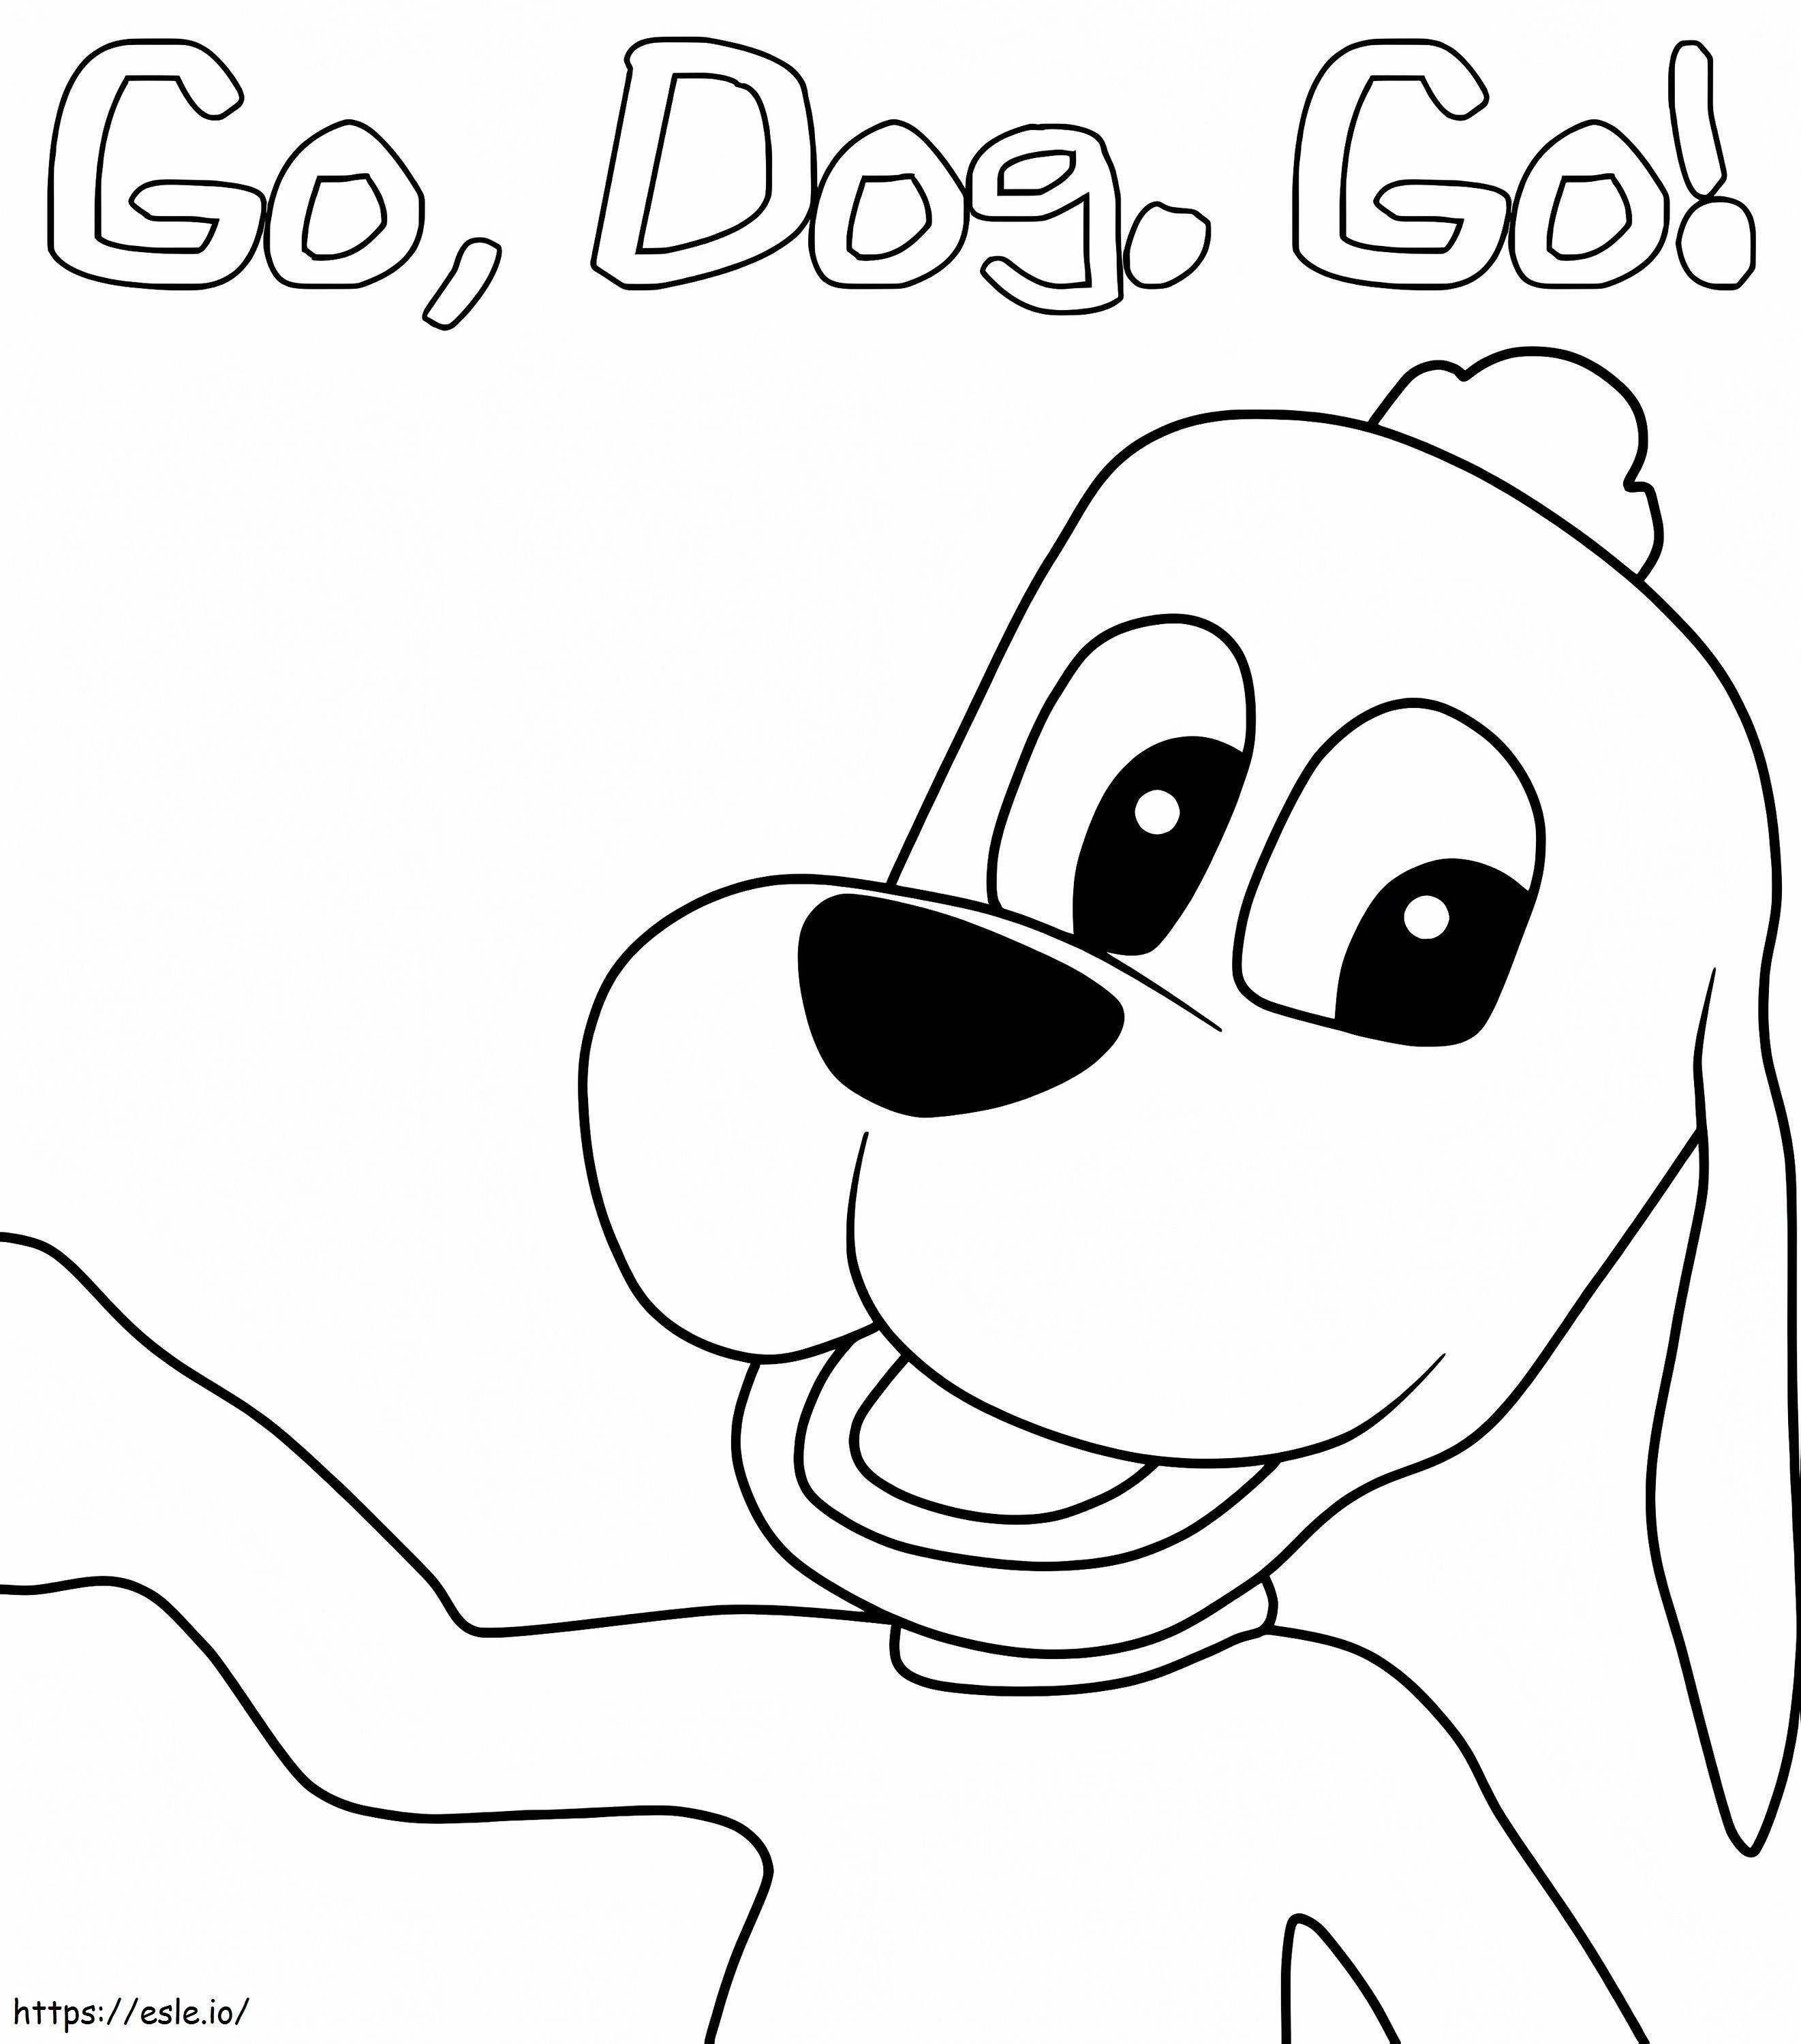 Coloriage Tag Barker de Go Dog Go à imprimer dessin